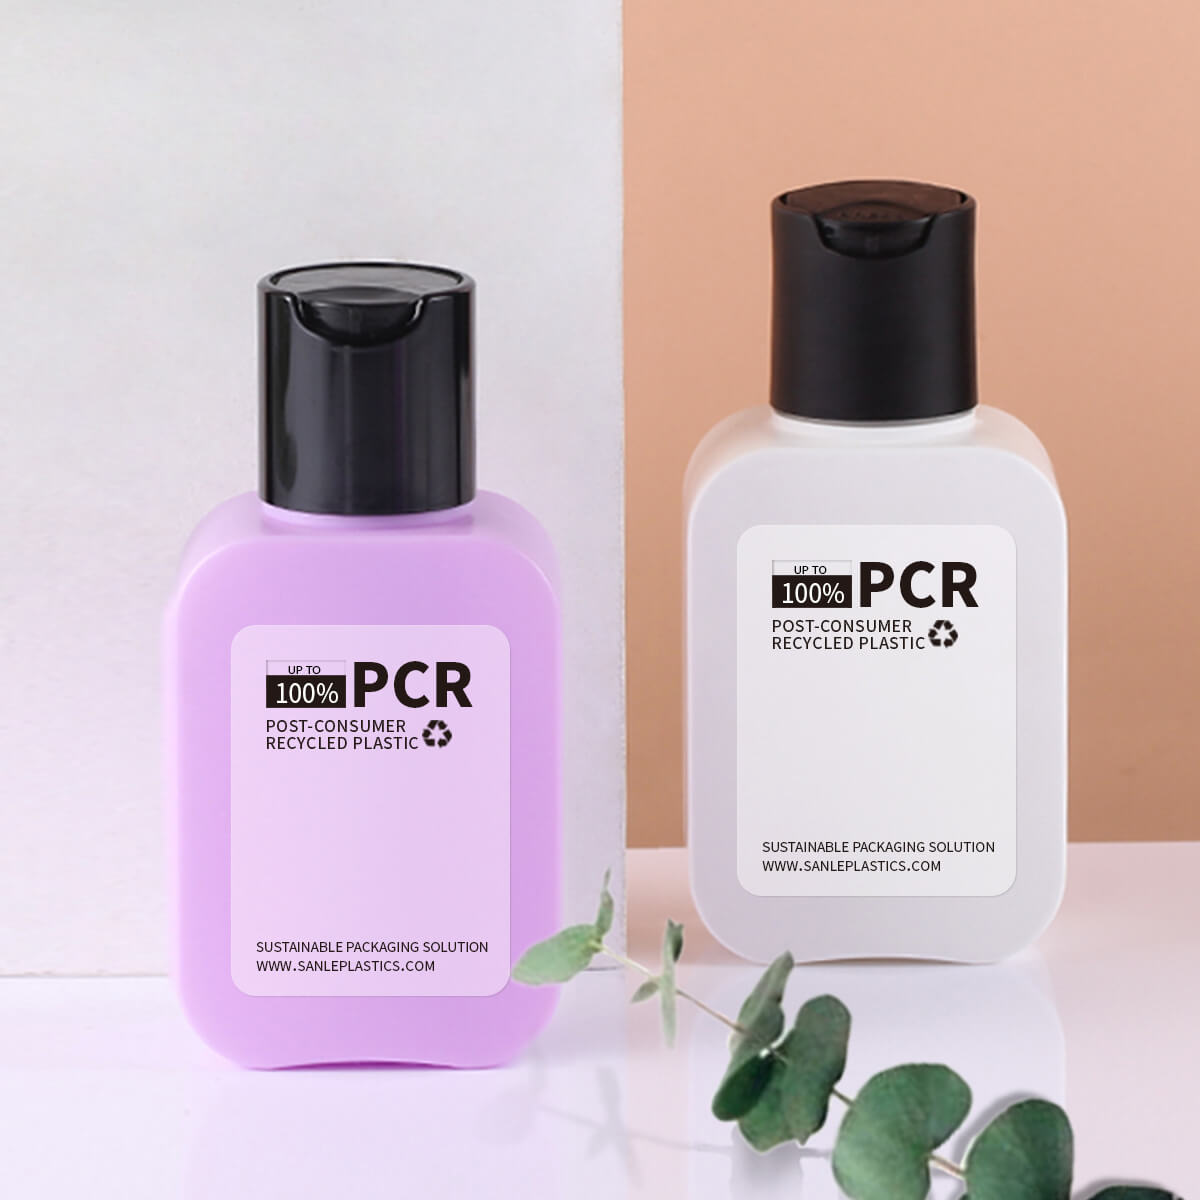 PCR plastic shampoo bottles